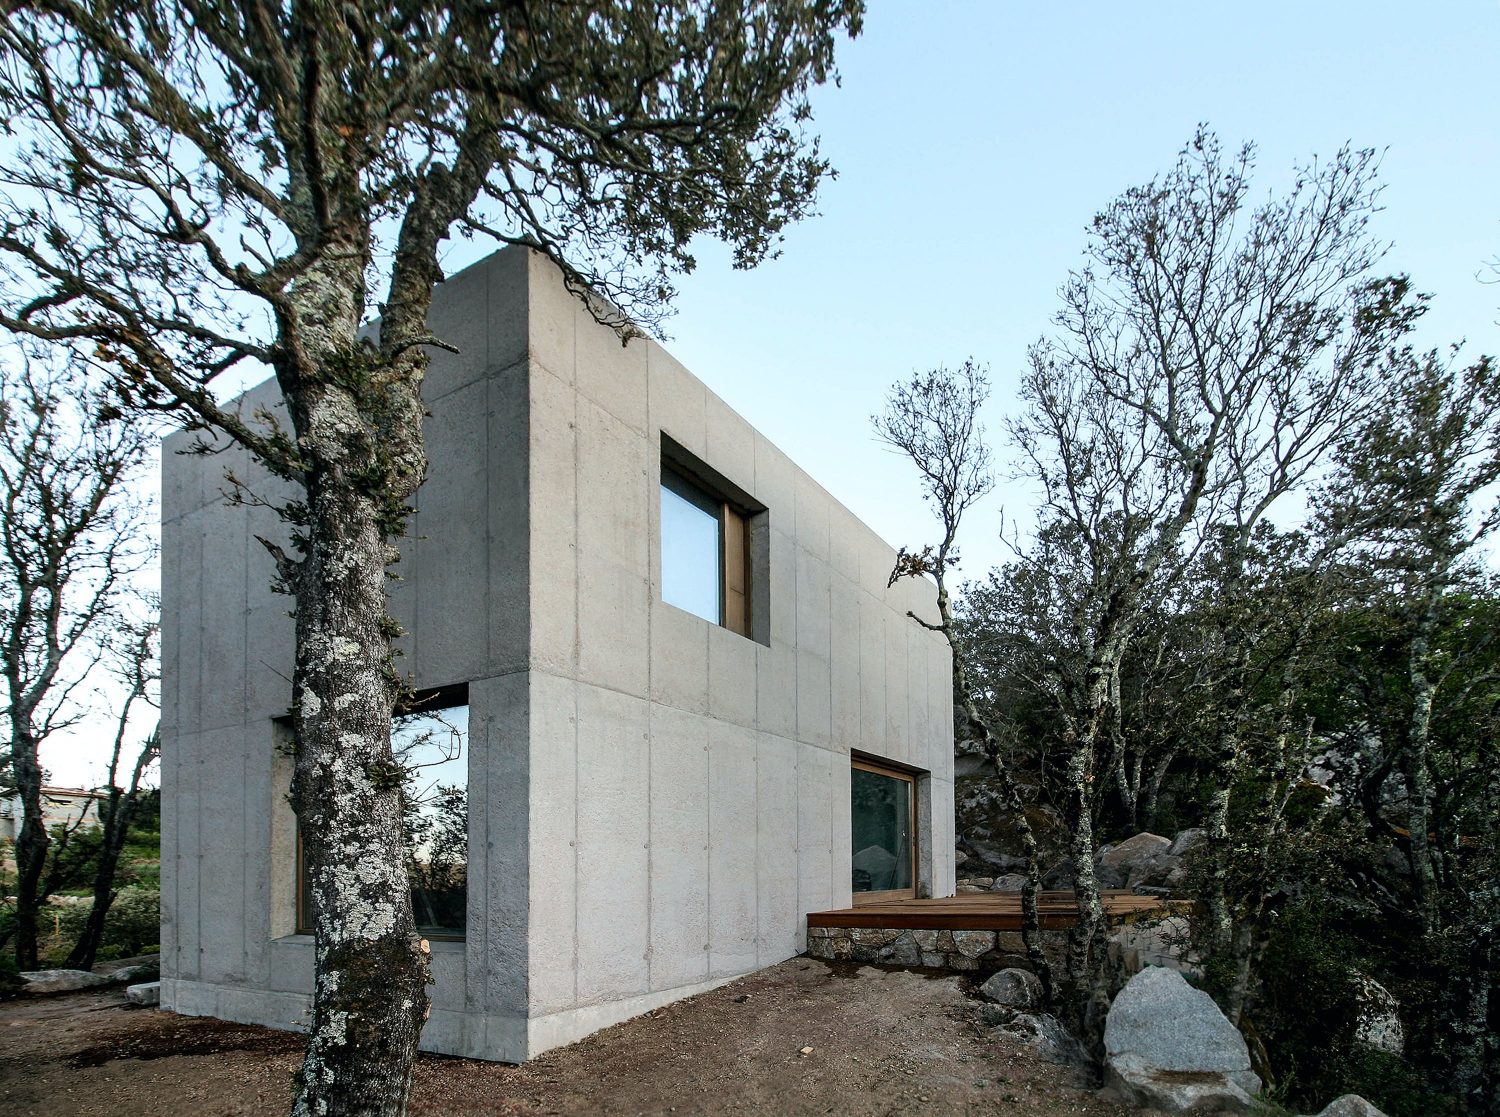 Casa R by Orma Architettura